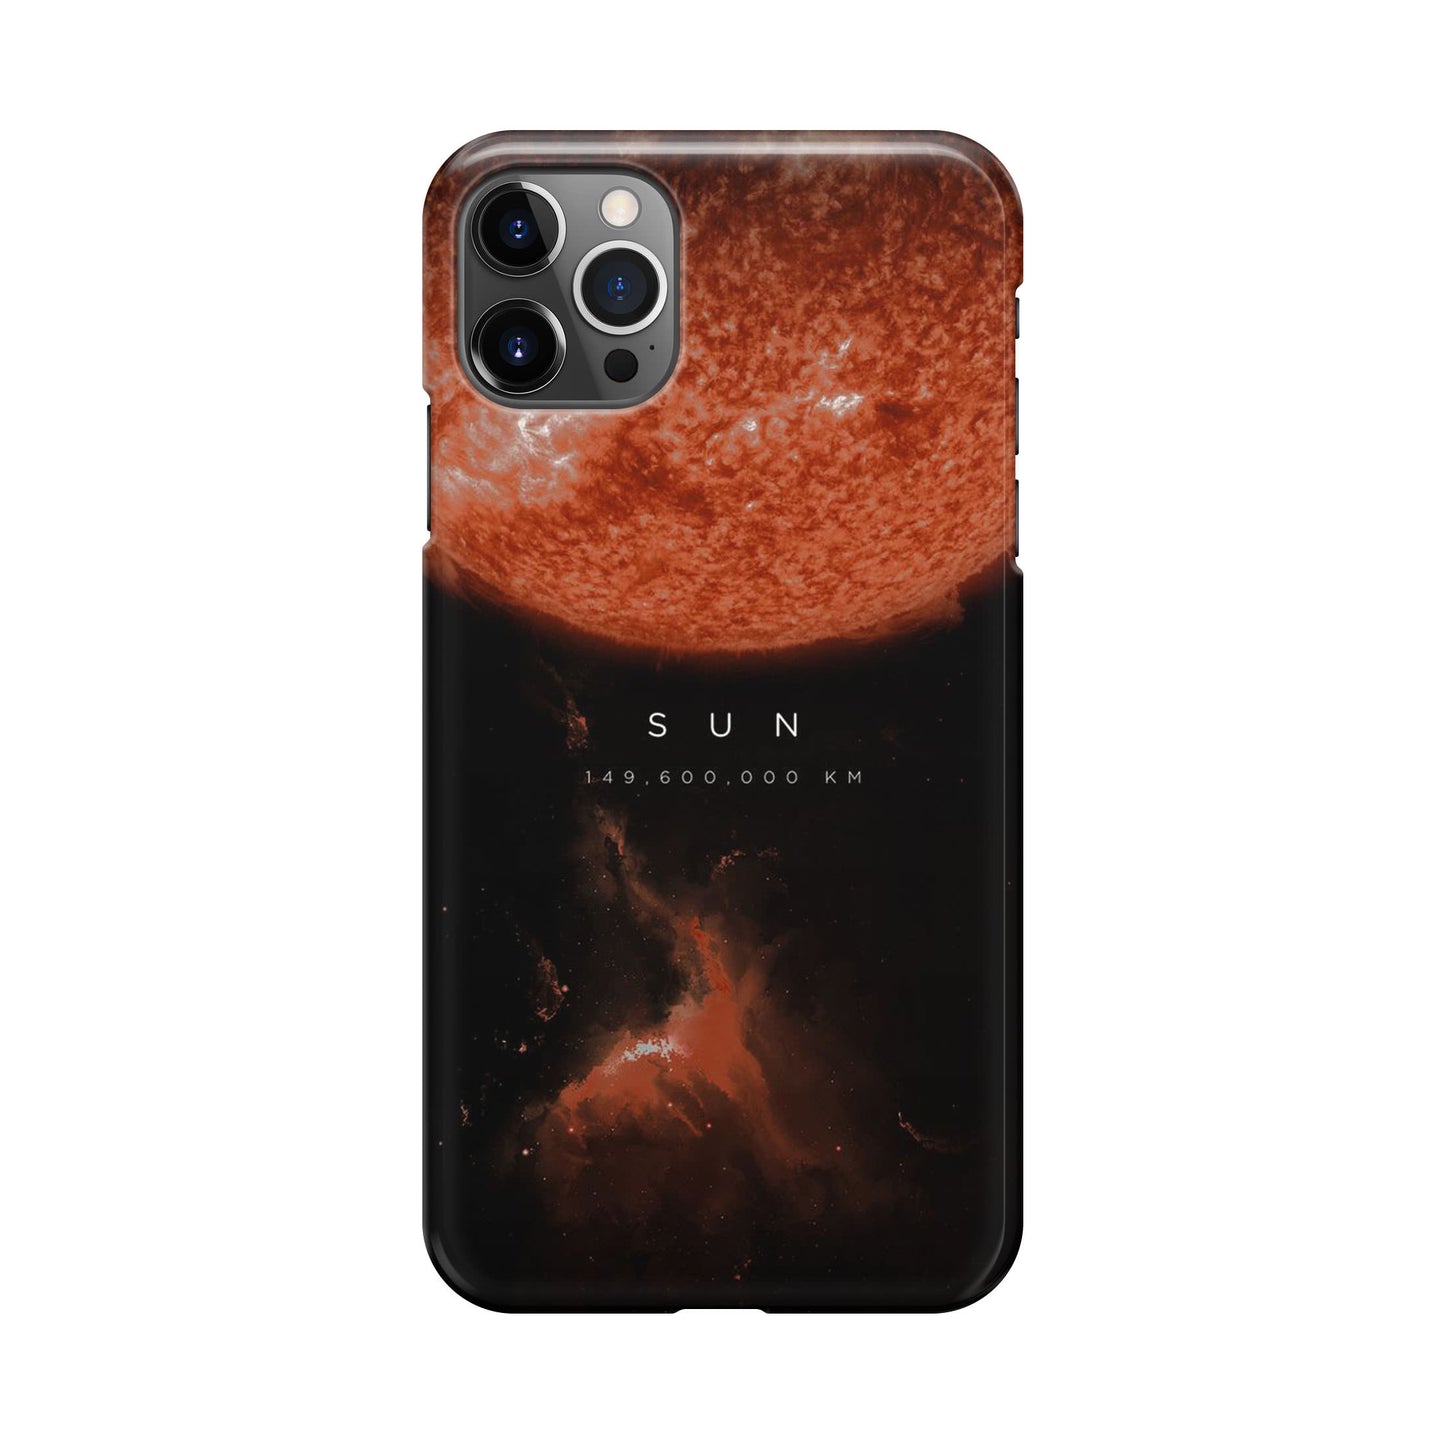 The Sun iPhone 12 Pro Max Case